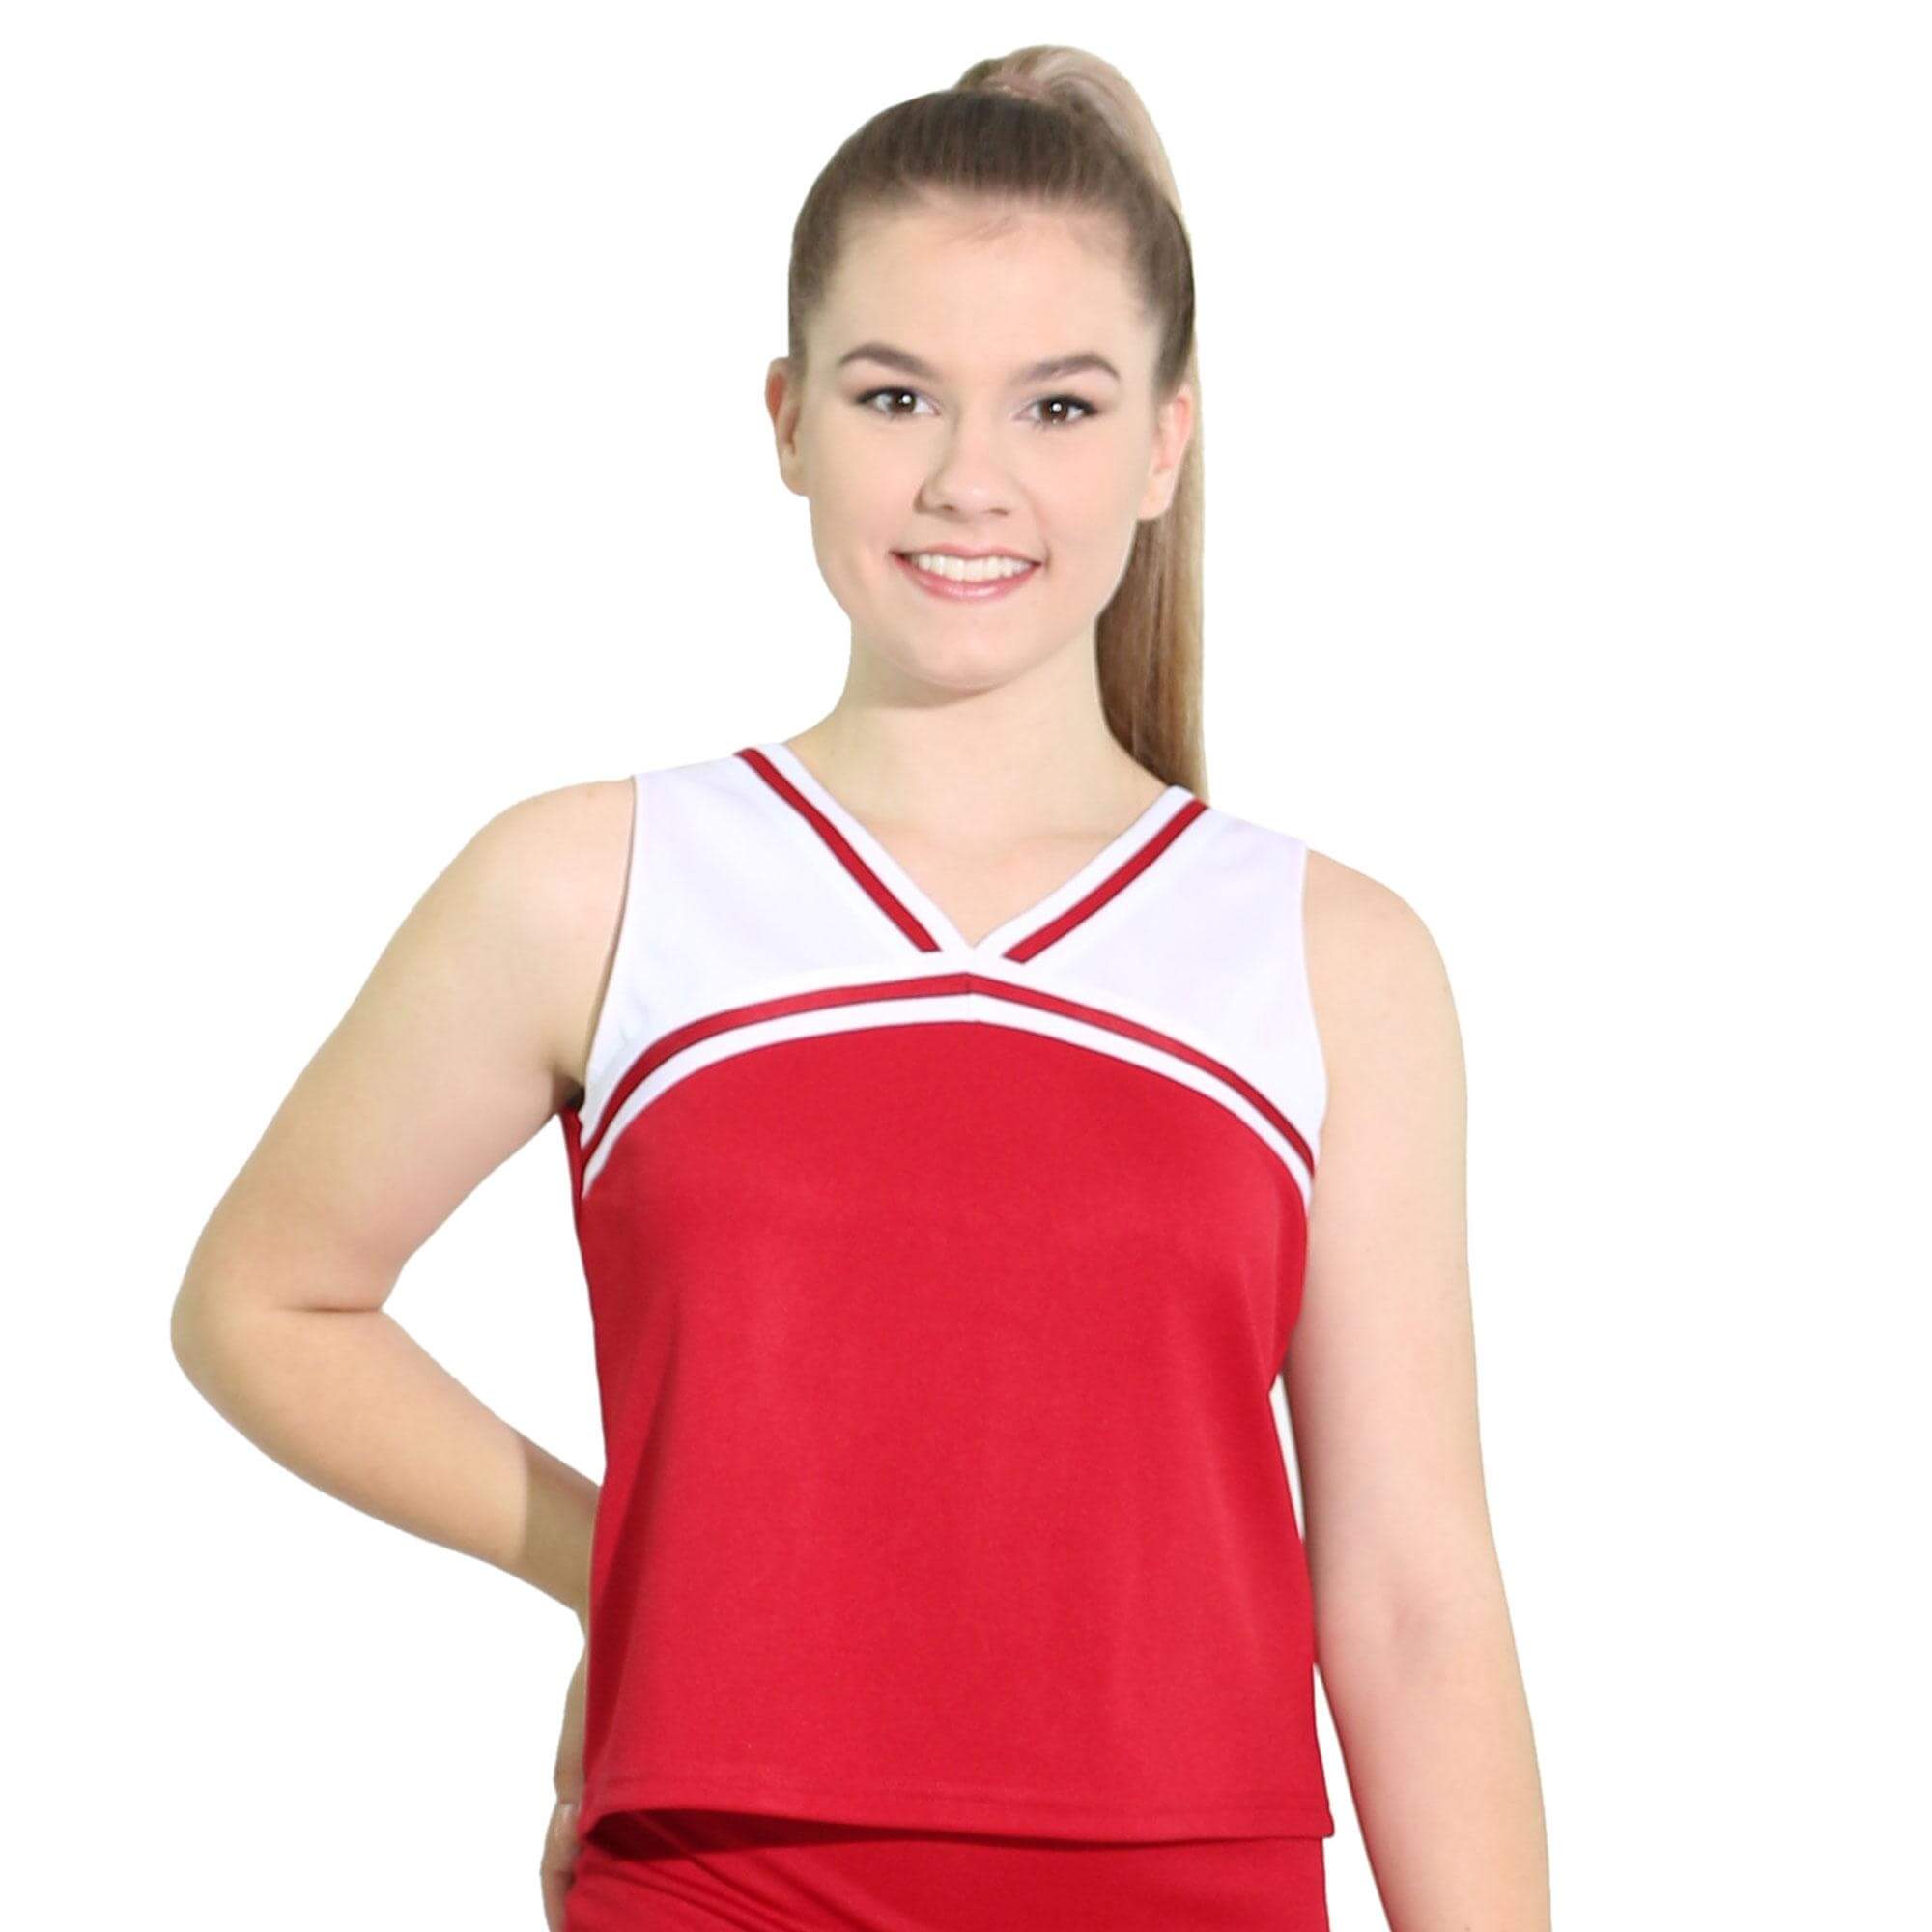 Danzcue Girls V-Neck Cheerleaders Uniform Shell Top